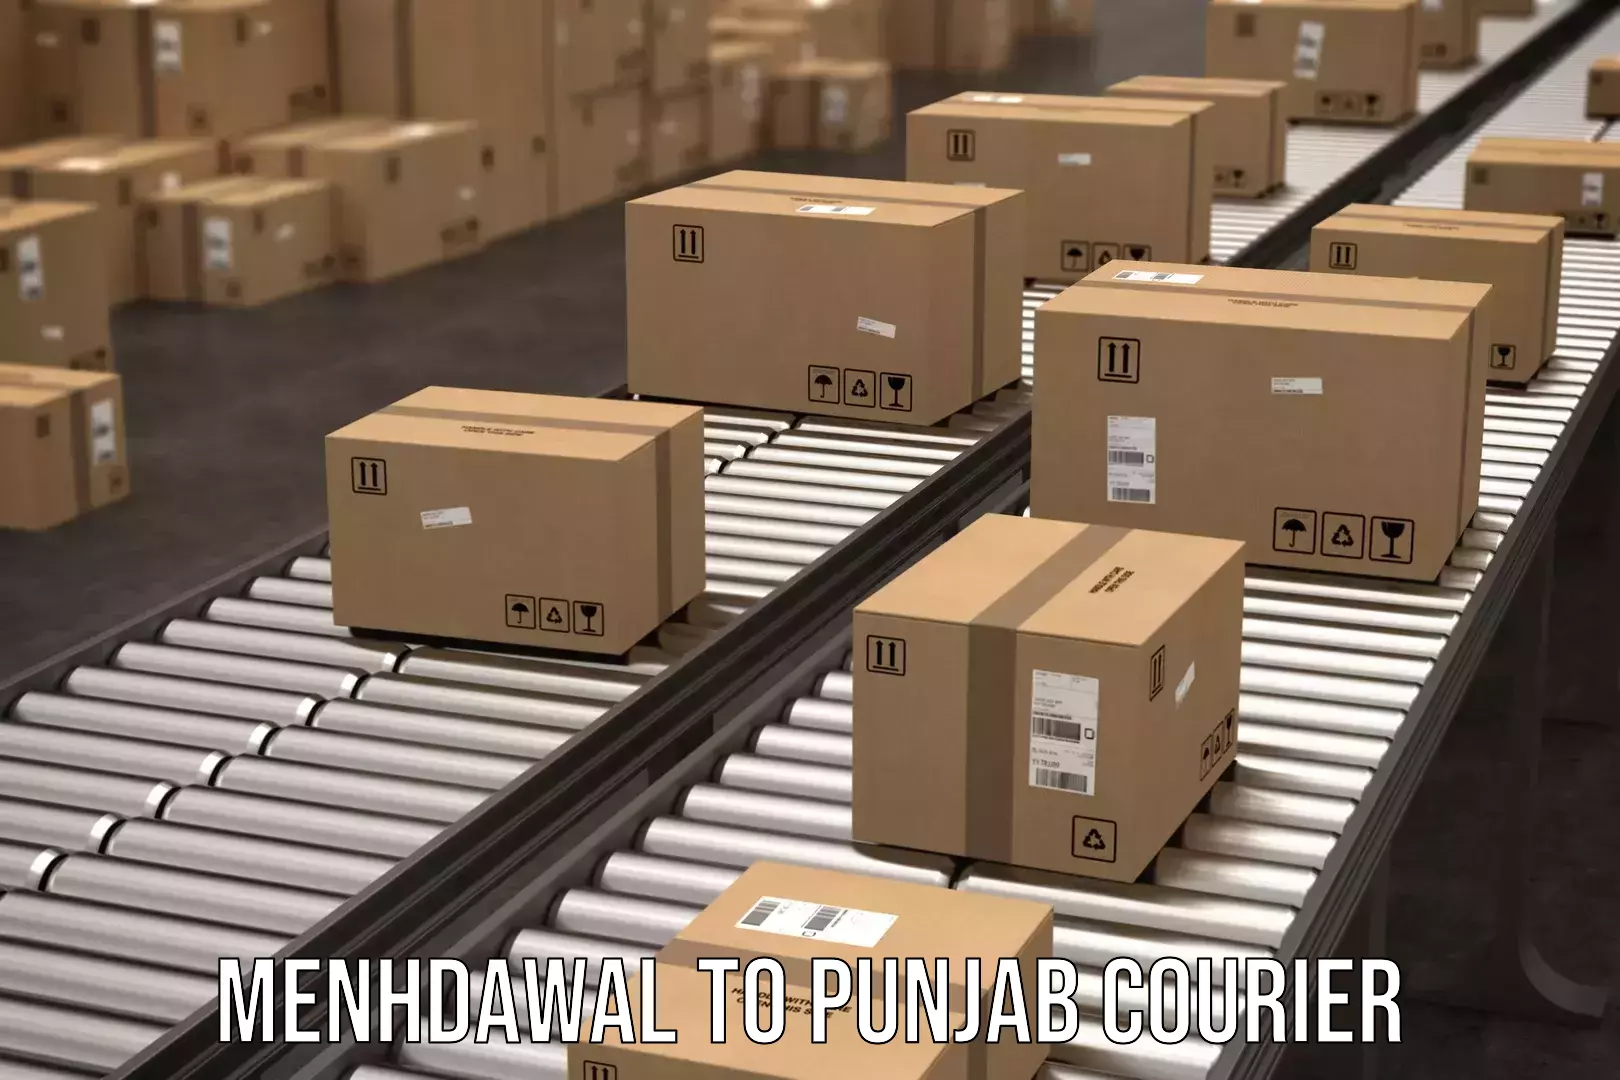 Multi-modal transportation Menhdawal to Punjab